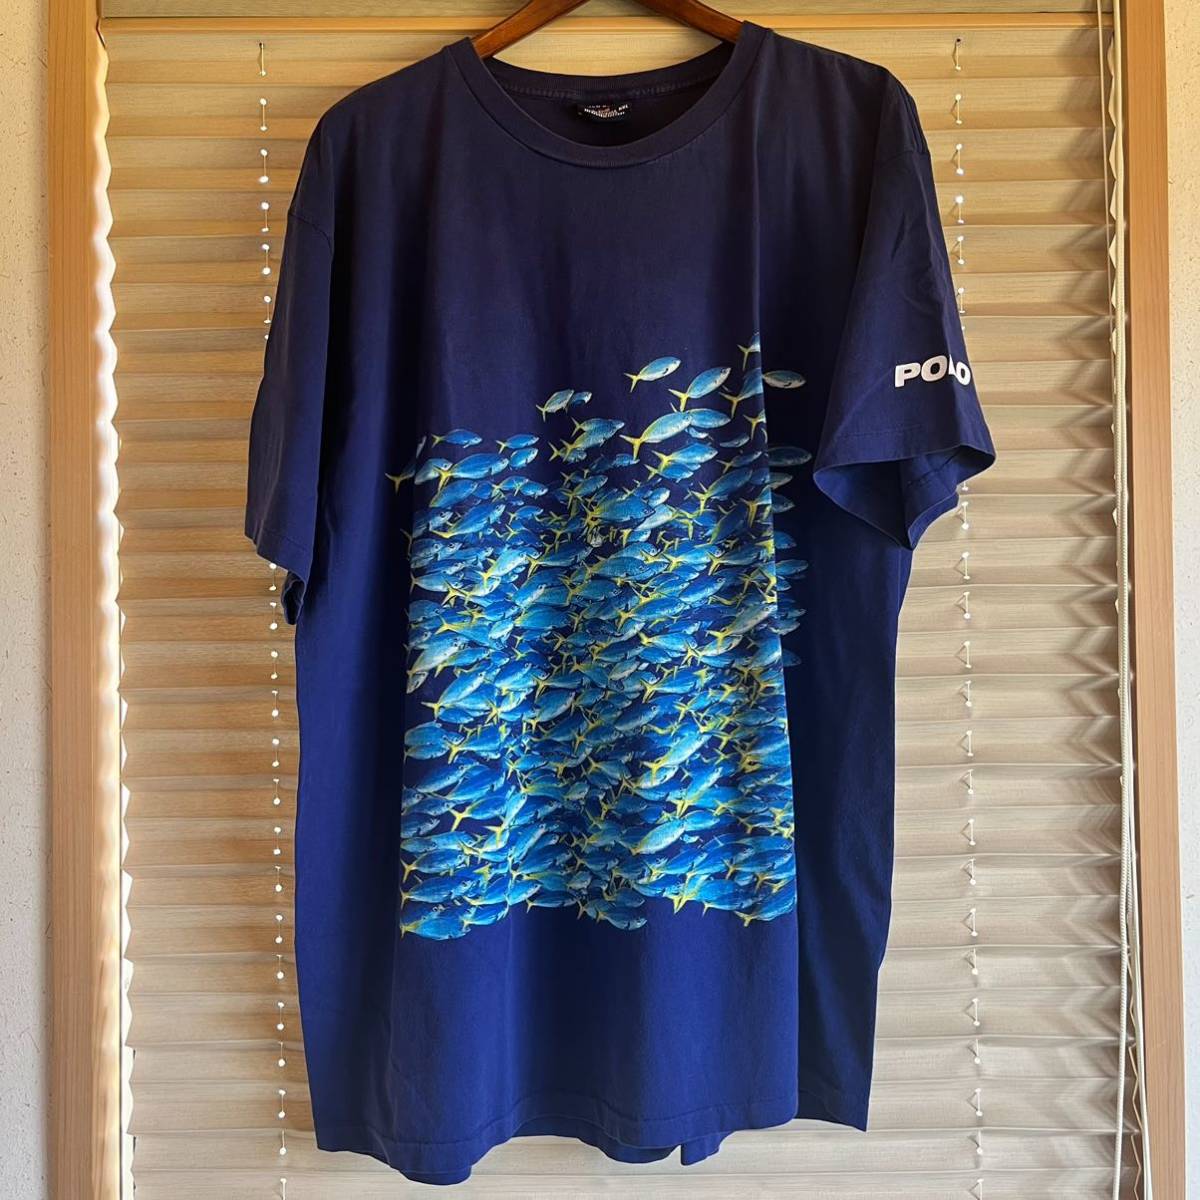 XXL POLO SPORT RALPH LAUREN fish shirt フィッシュ Tシャツ ショーツ セットアップrrl country 1992 1993 stadium snow beach